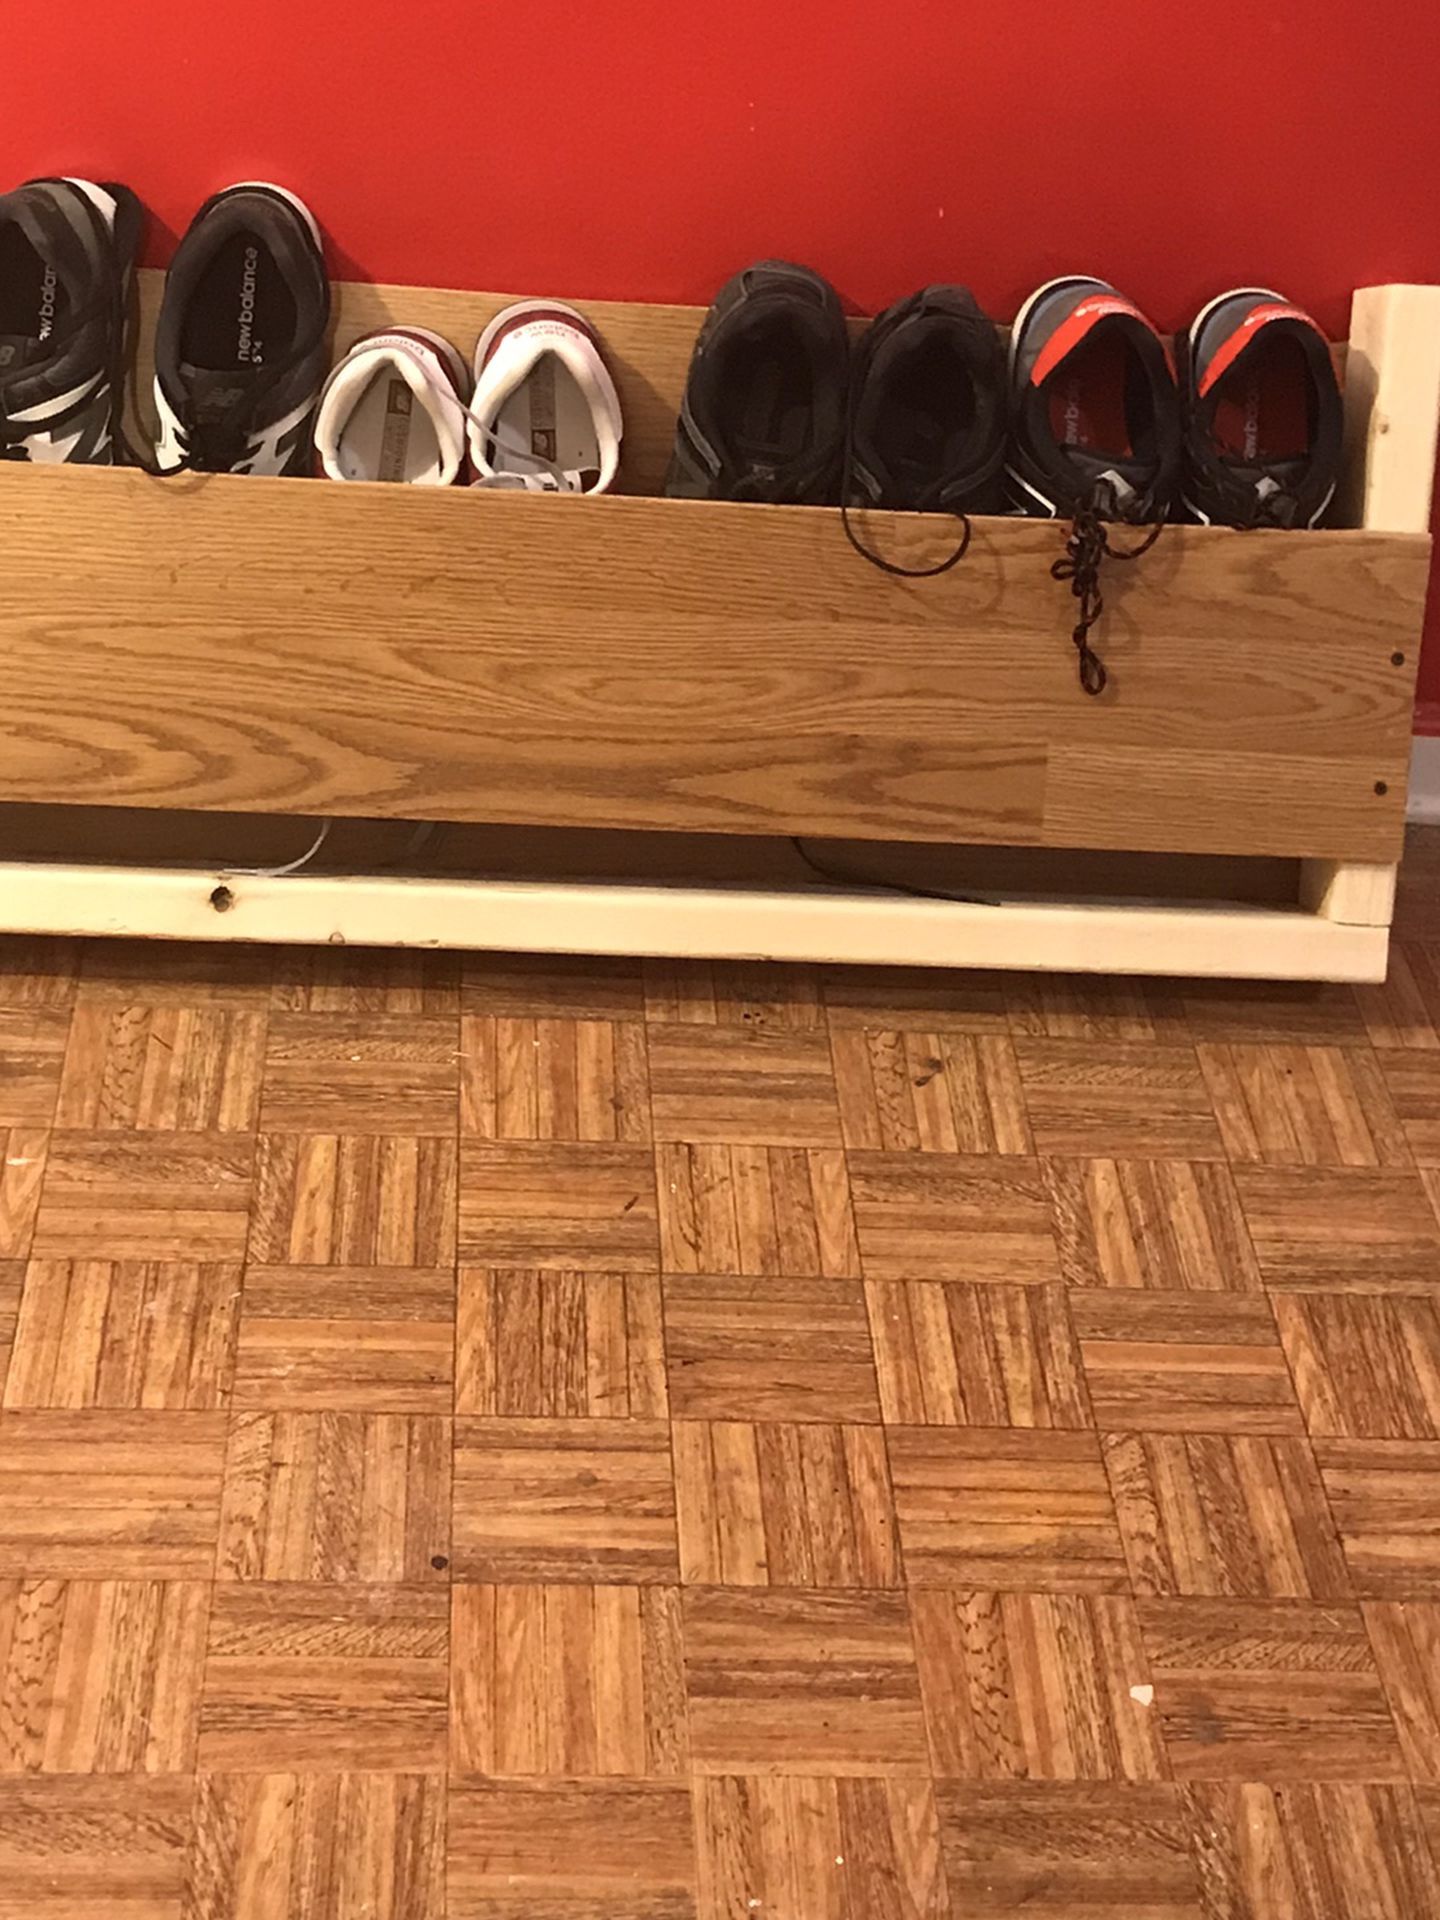 4 Pair Wall Mount Or Floor Shoe Holder